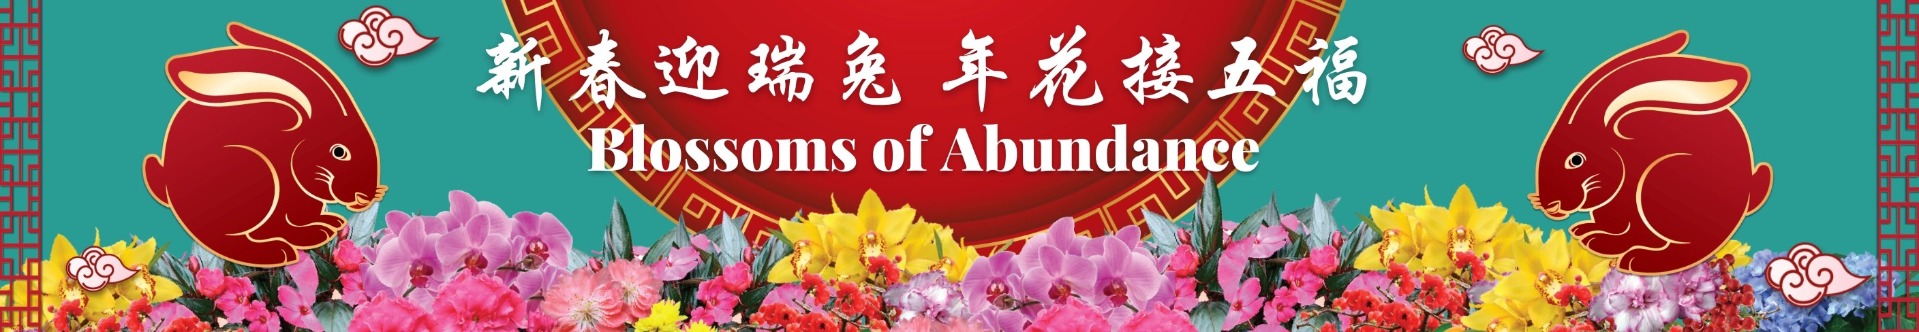 CNY Blossoms of Abundance